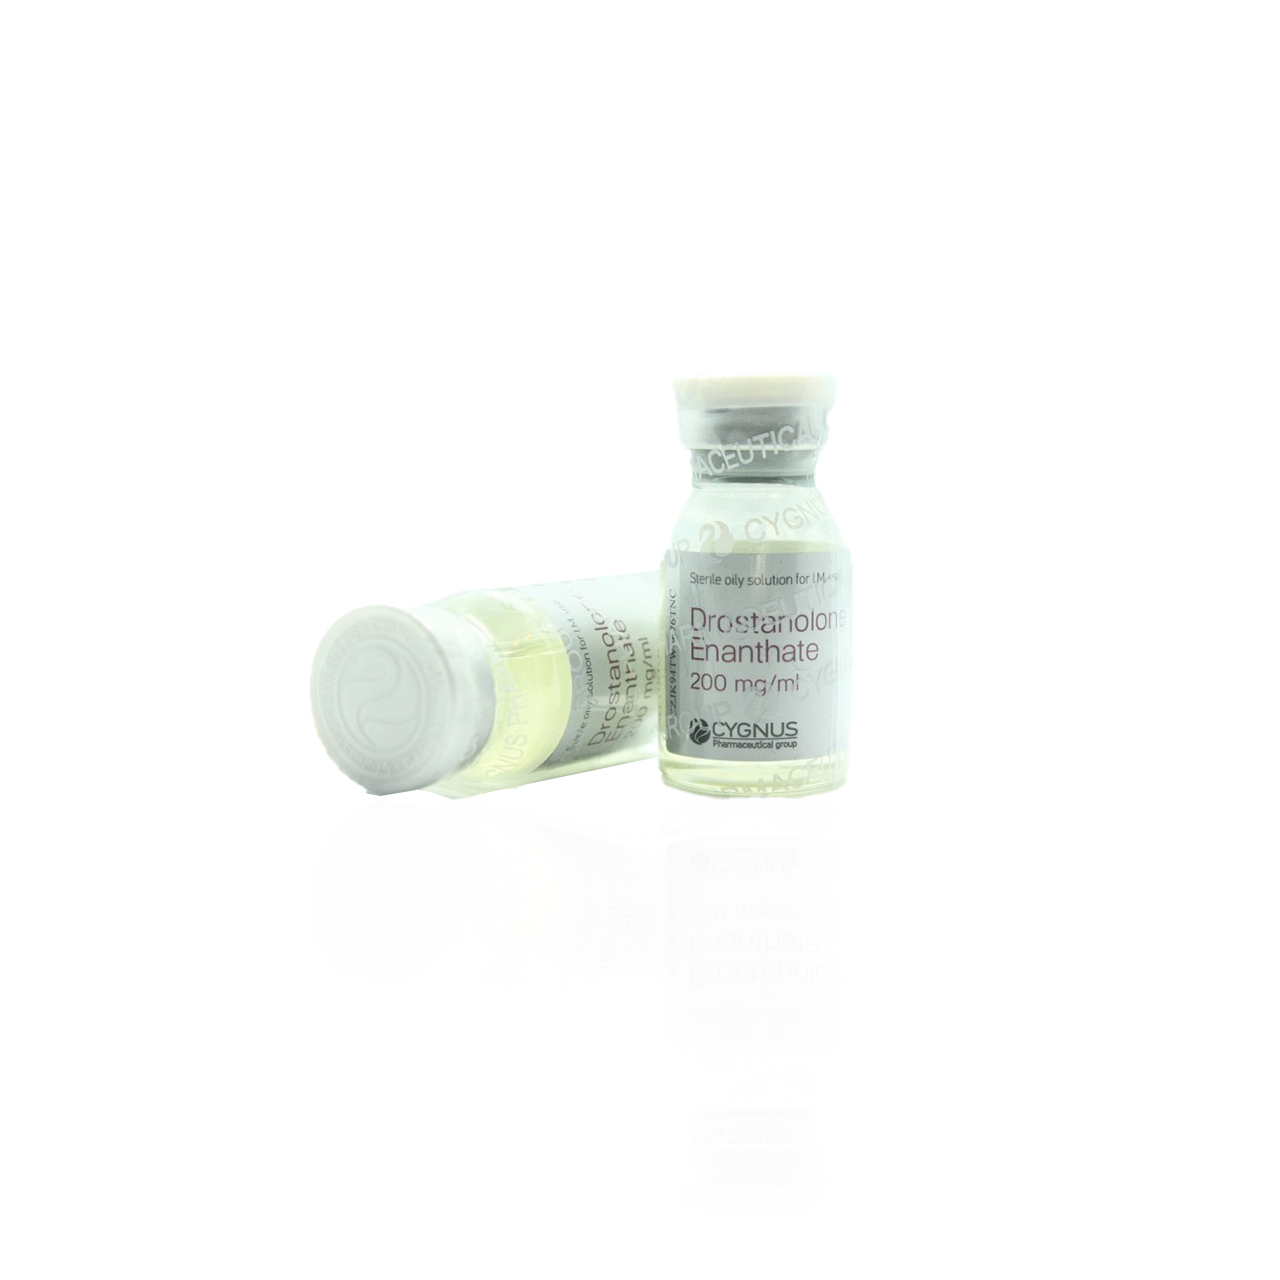 Drostanolone Enanthate 200 mg Cygnus Drostanolone 5